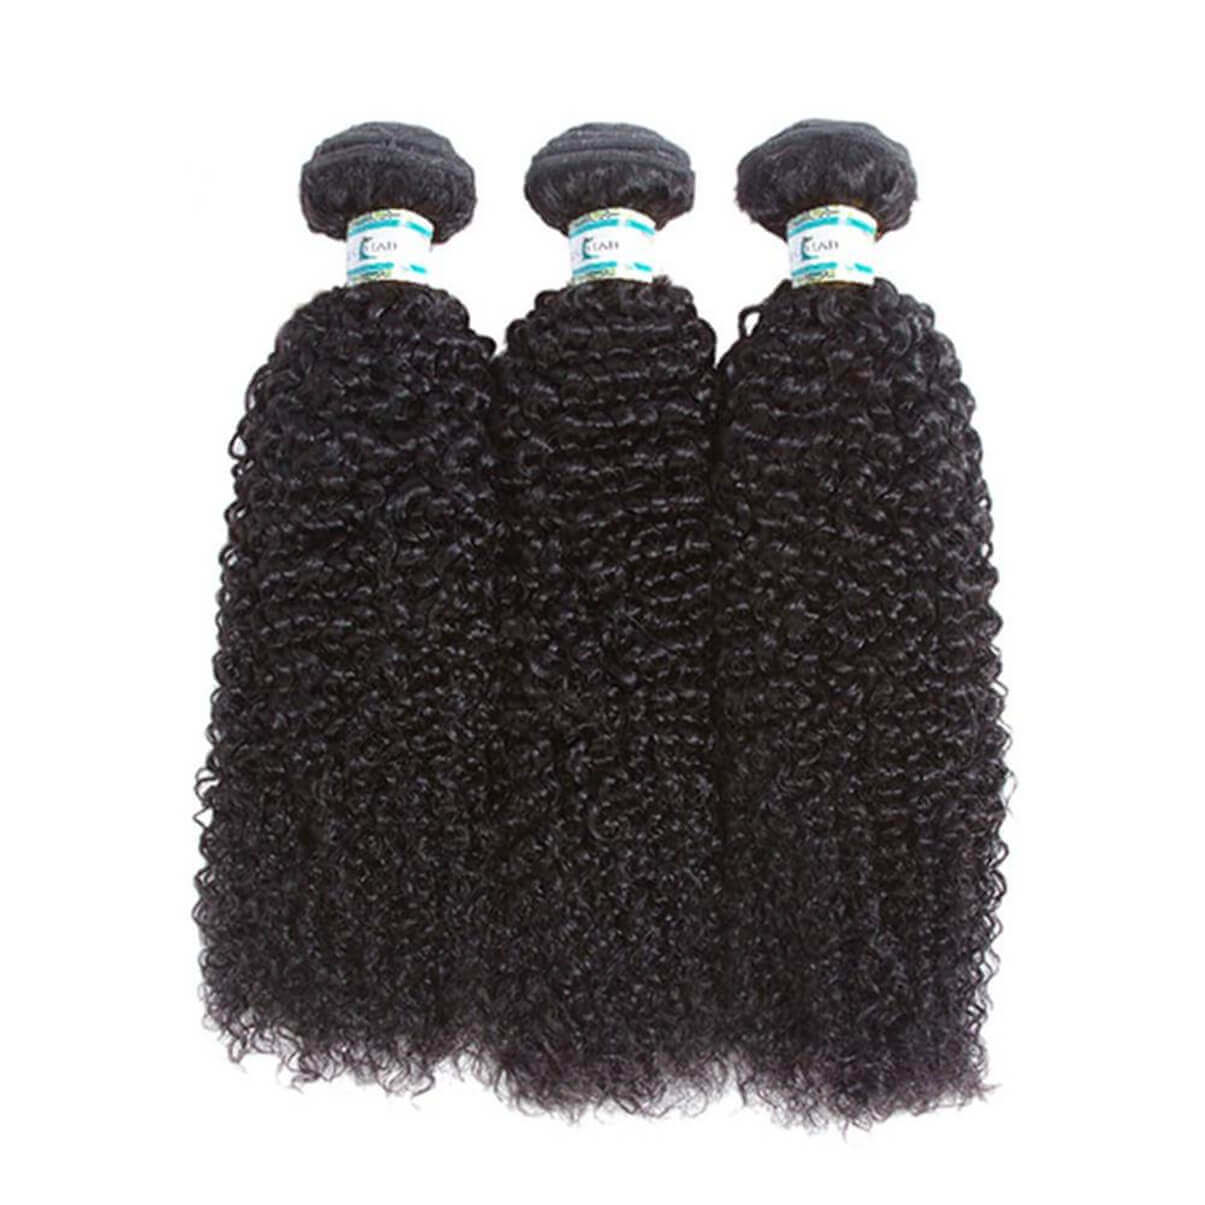 Lakihair Kinky Curly 4 Bundles Virgin Human Hair Bundles Wholesale Price Good Quality Hair